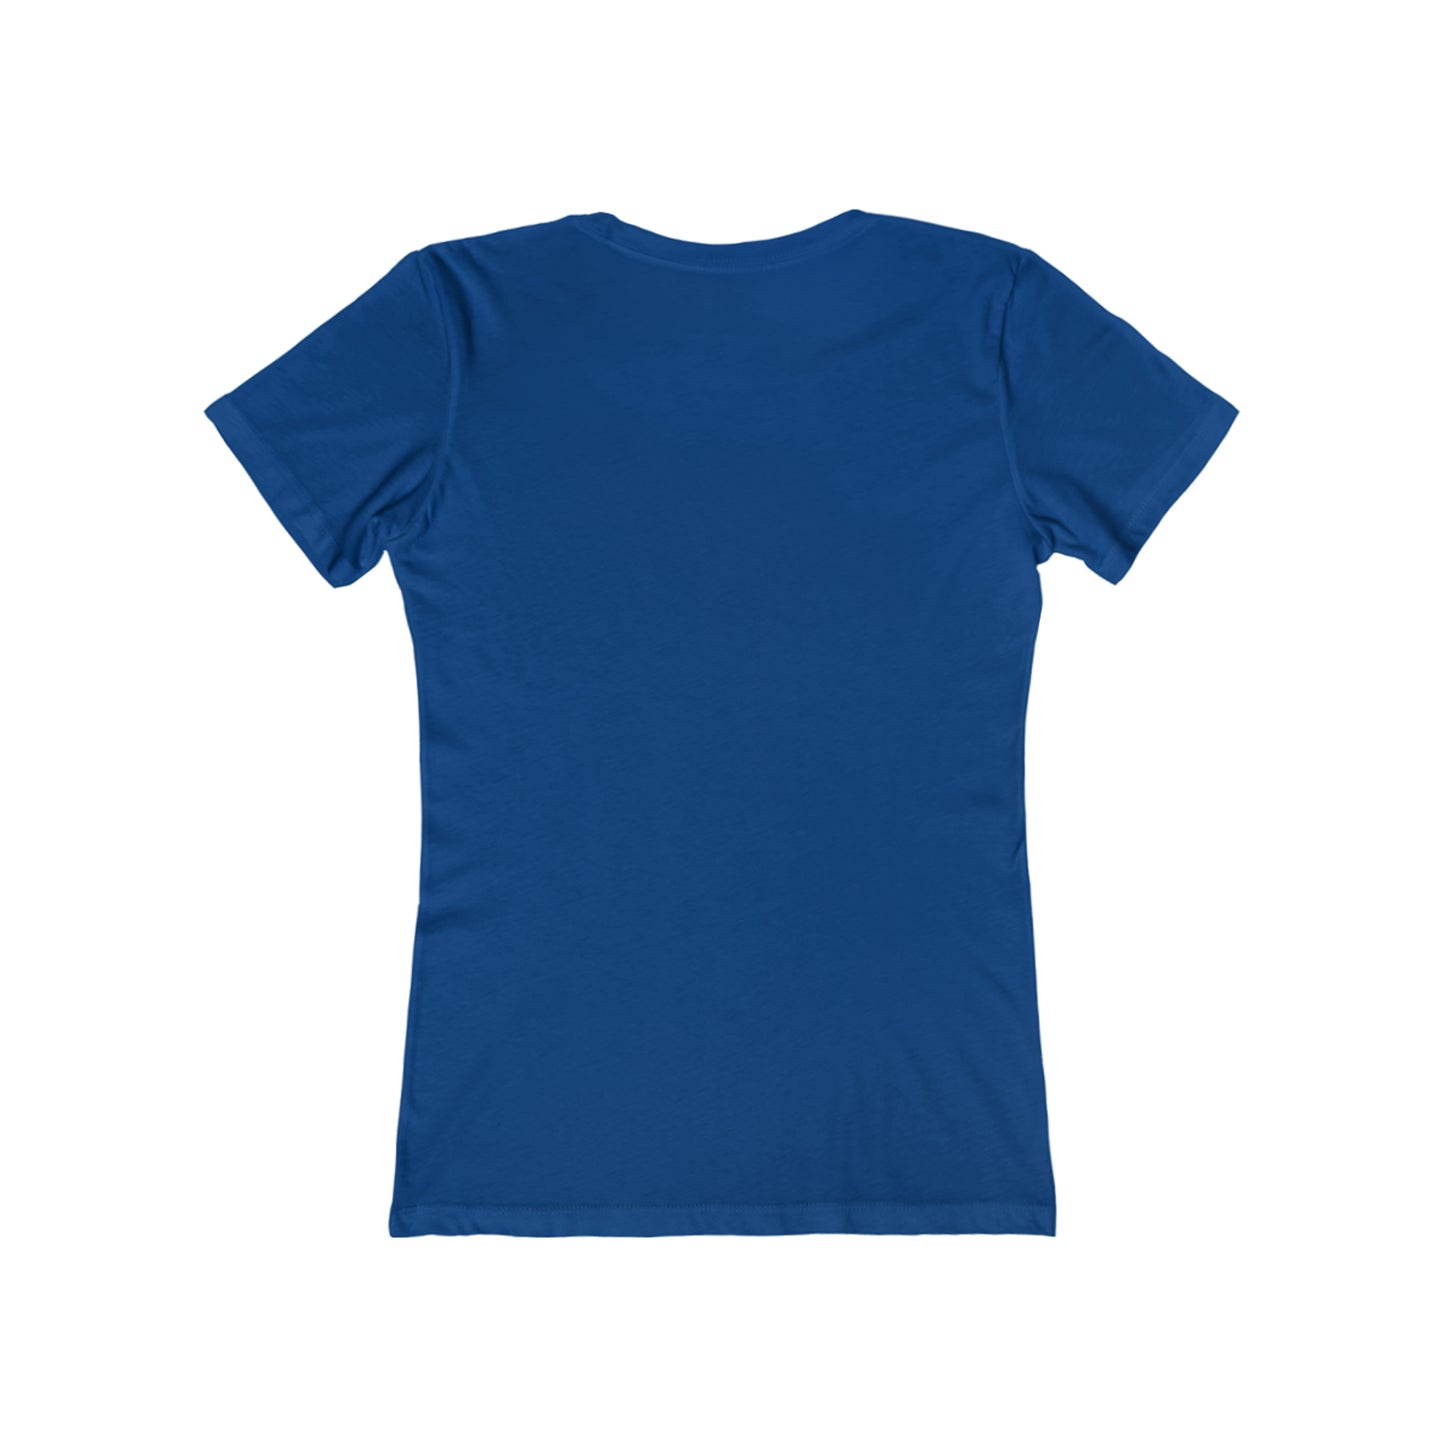 Trapezoid - Women's T-Shirt